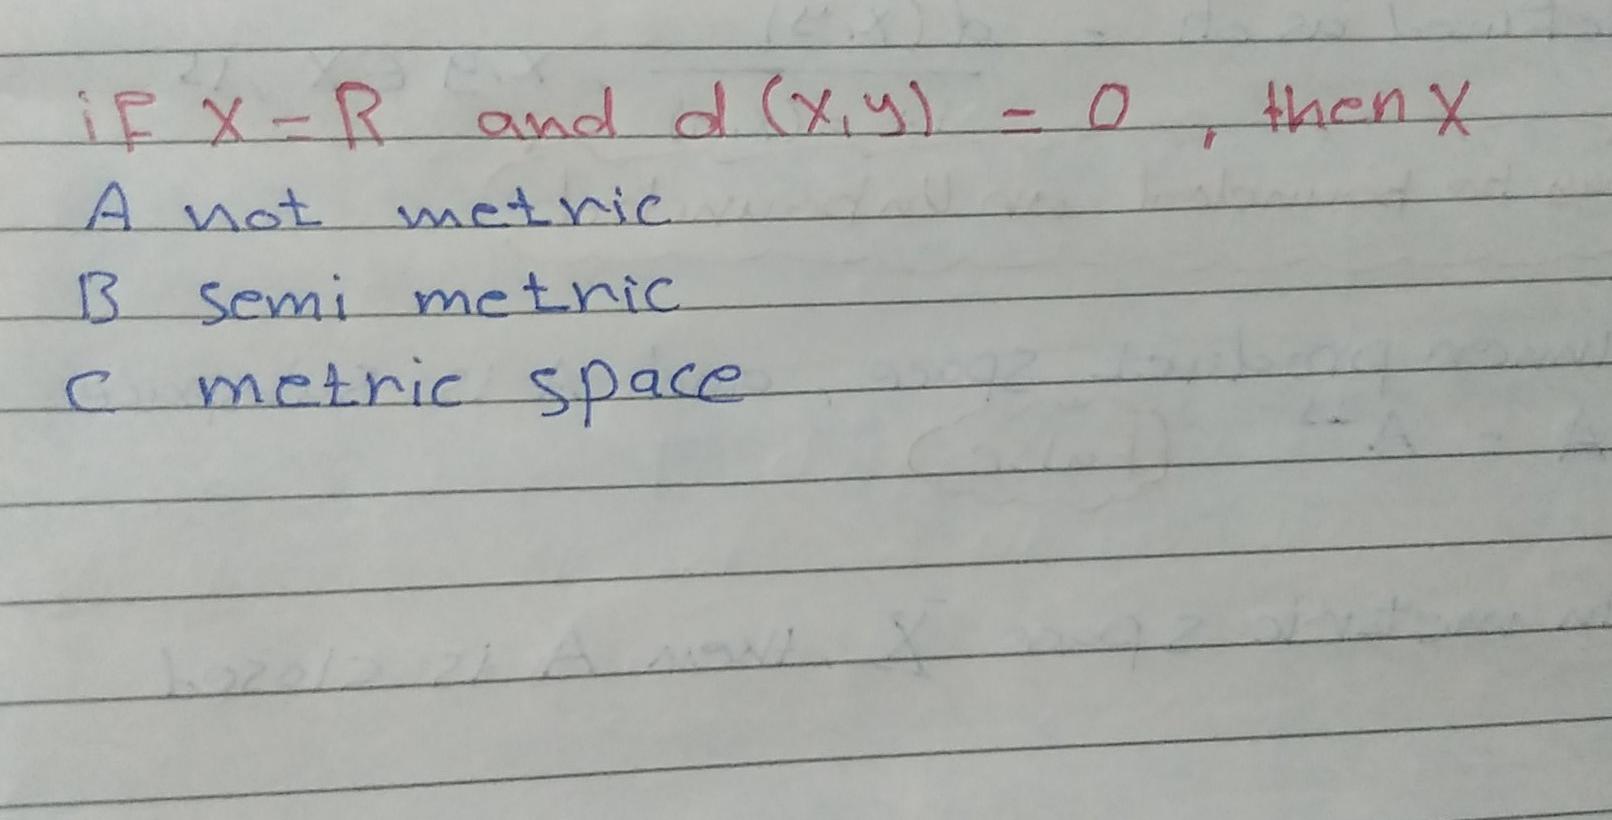 O Then Y X If X R And D X Y A A Not Metric B Semi Methic C Metric Space 1